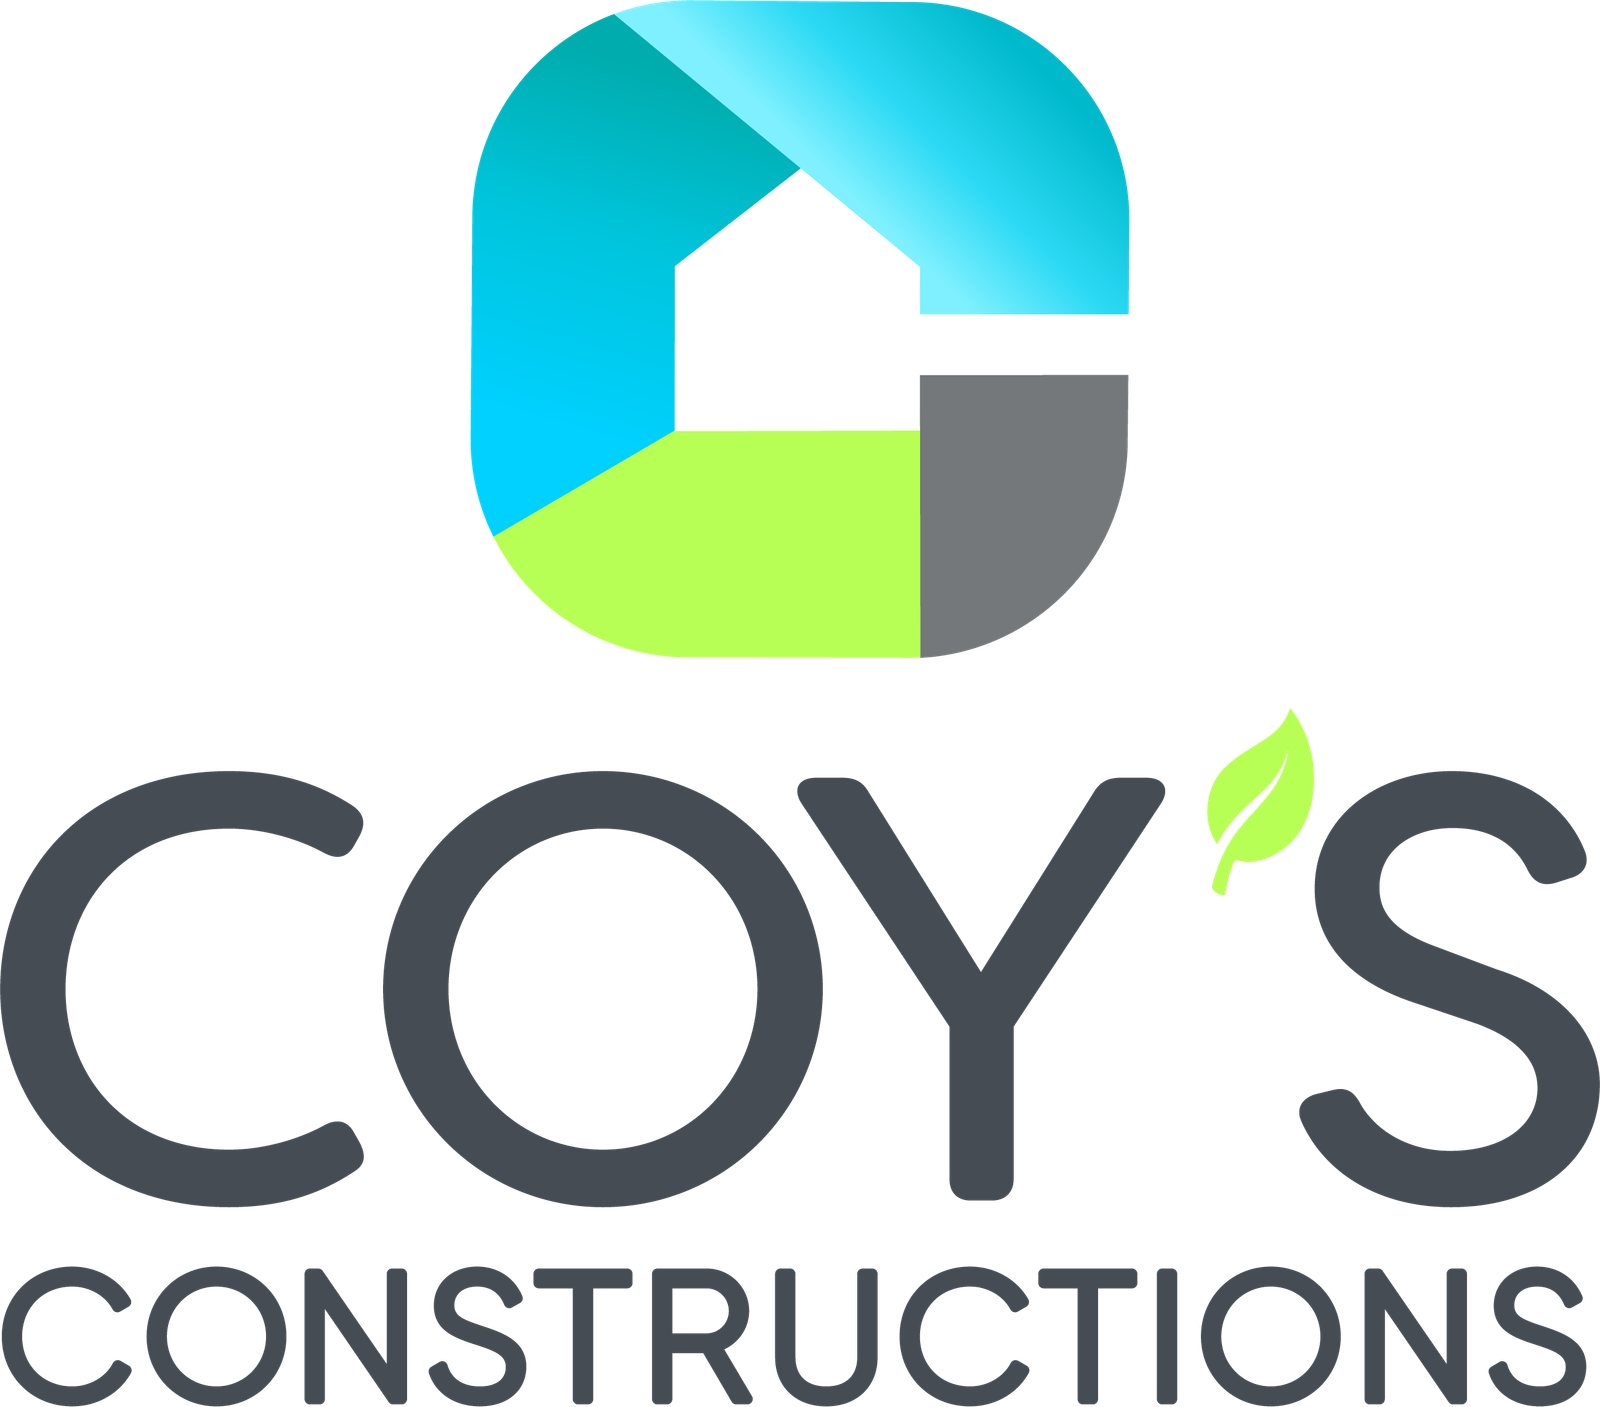 Coy’s Constructions